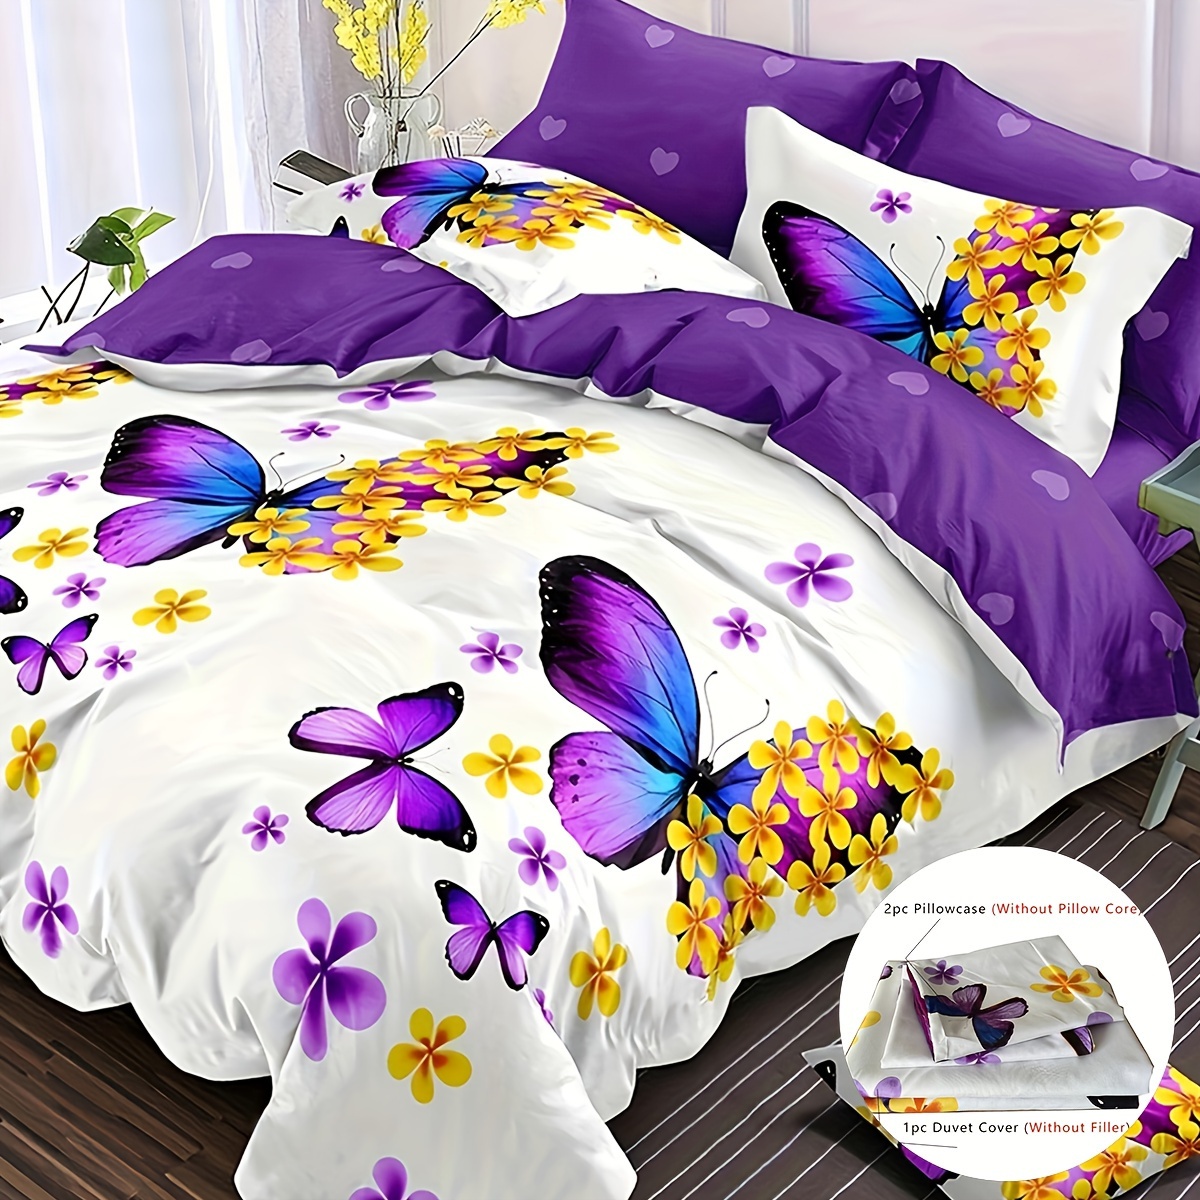 Purple Leopard Print Bedding Sets Twin Gold Butterfly Comforter